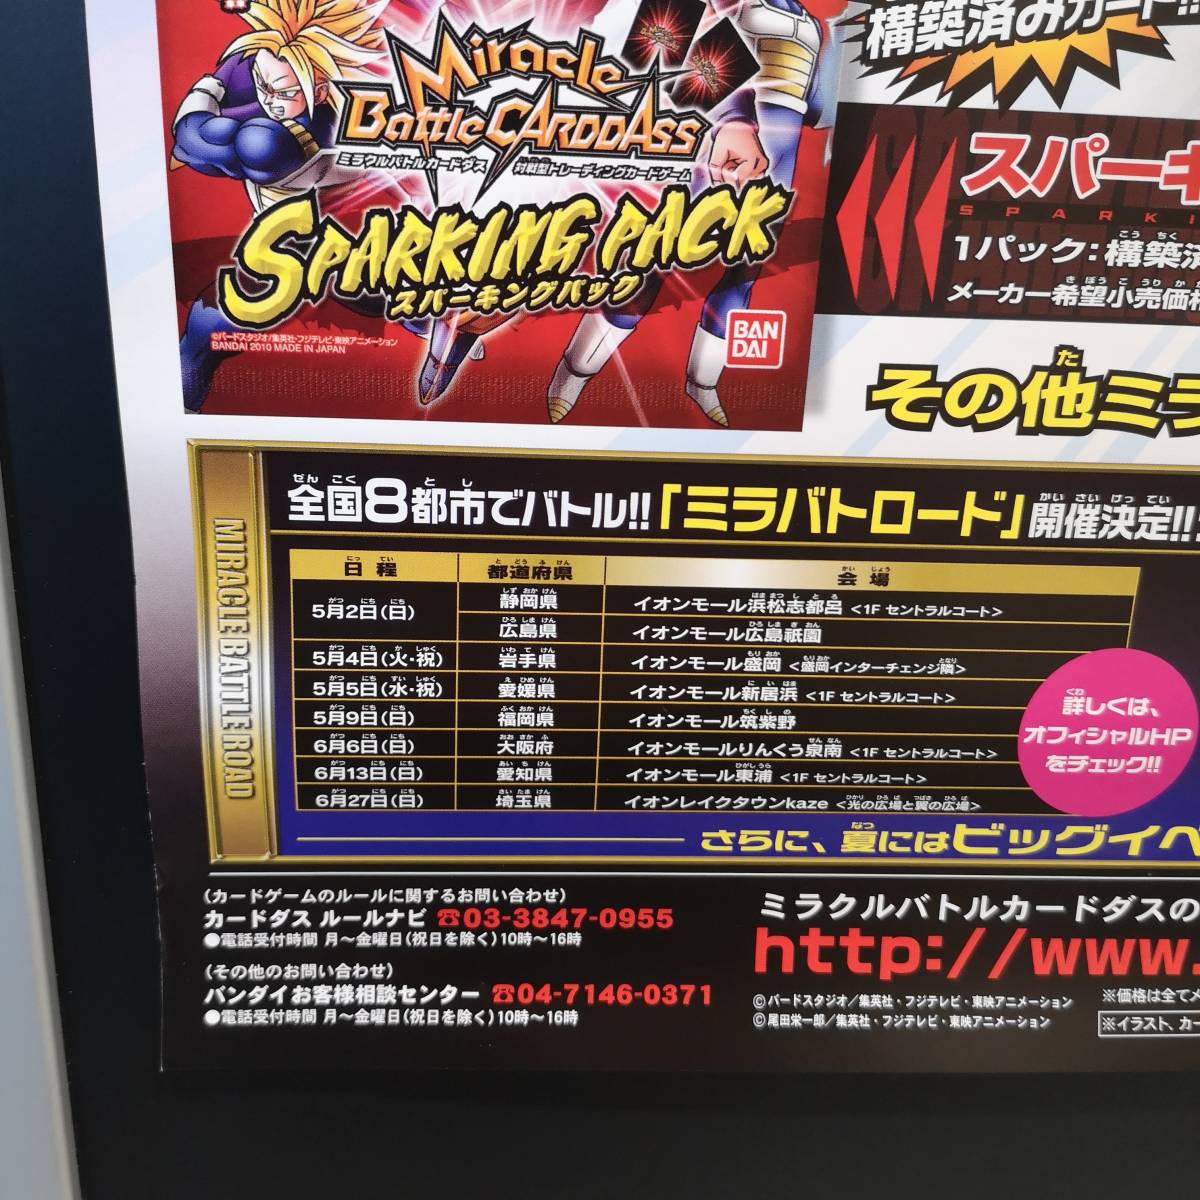 *[ not for sale ]B2 poster * Miracle Battle Carddas! ONE PIECE* Dragon Ball poster 1 sheets (2010 year / Mira bato/BANDAI/ rare /ZA3)